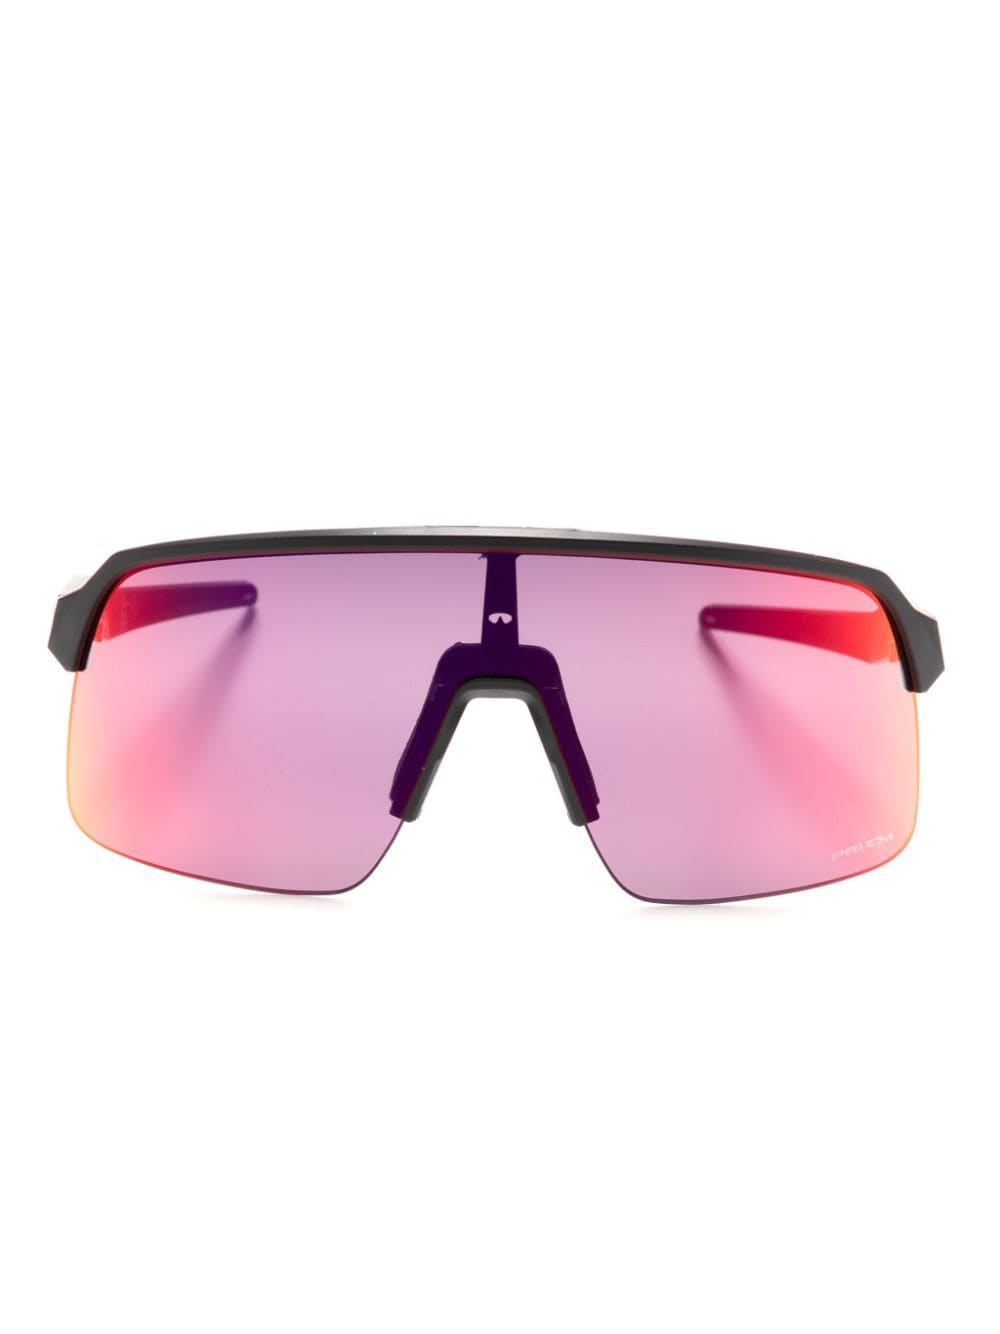 OO9463 shield-frame sunglasses<BR/><BR/><BR/>